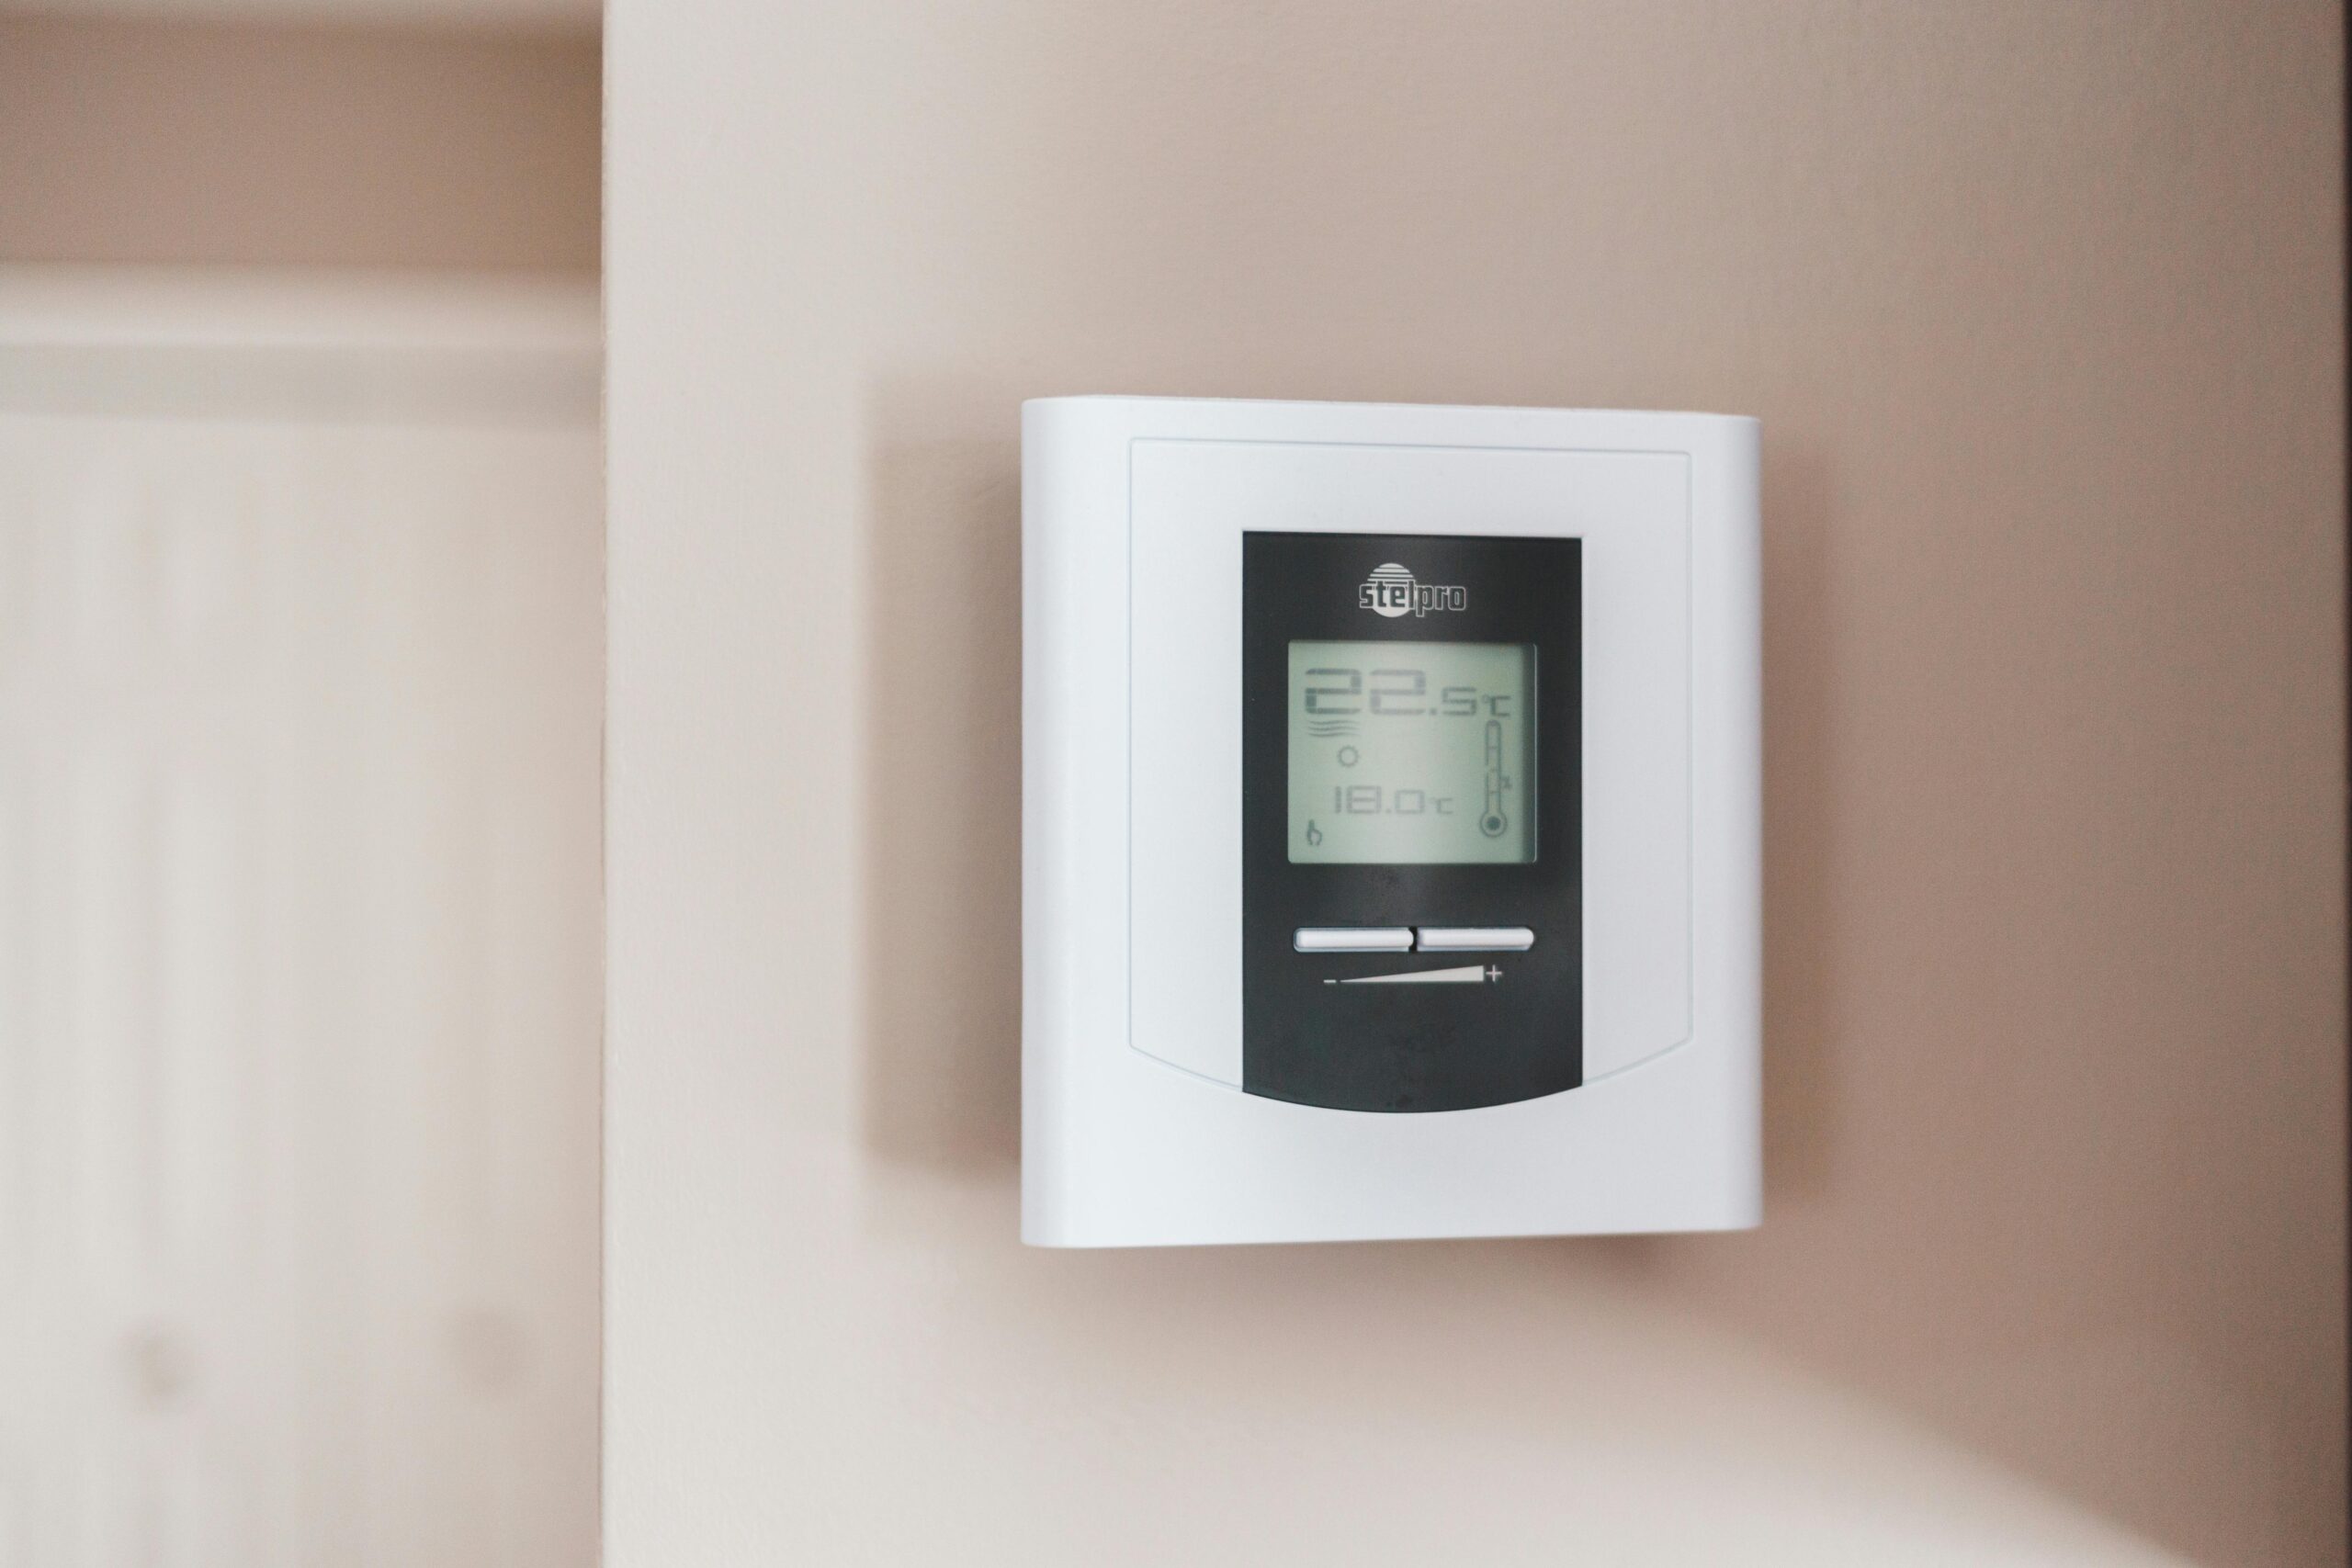 Lite Smart Thermostats